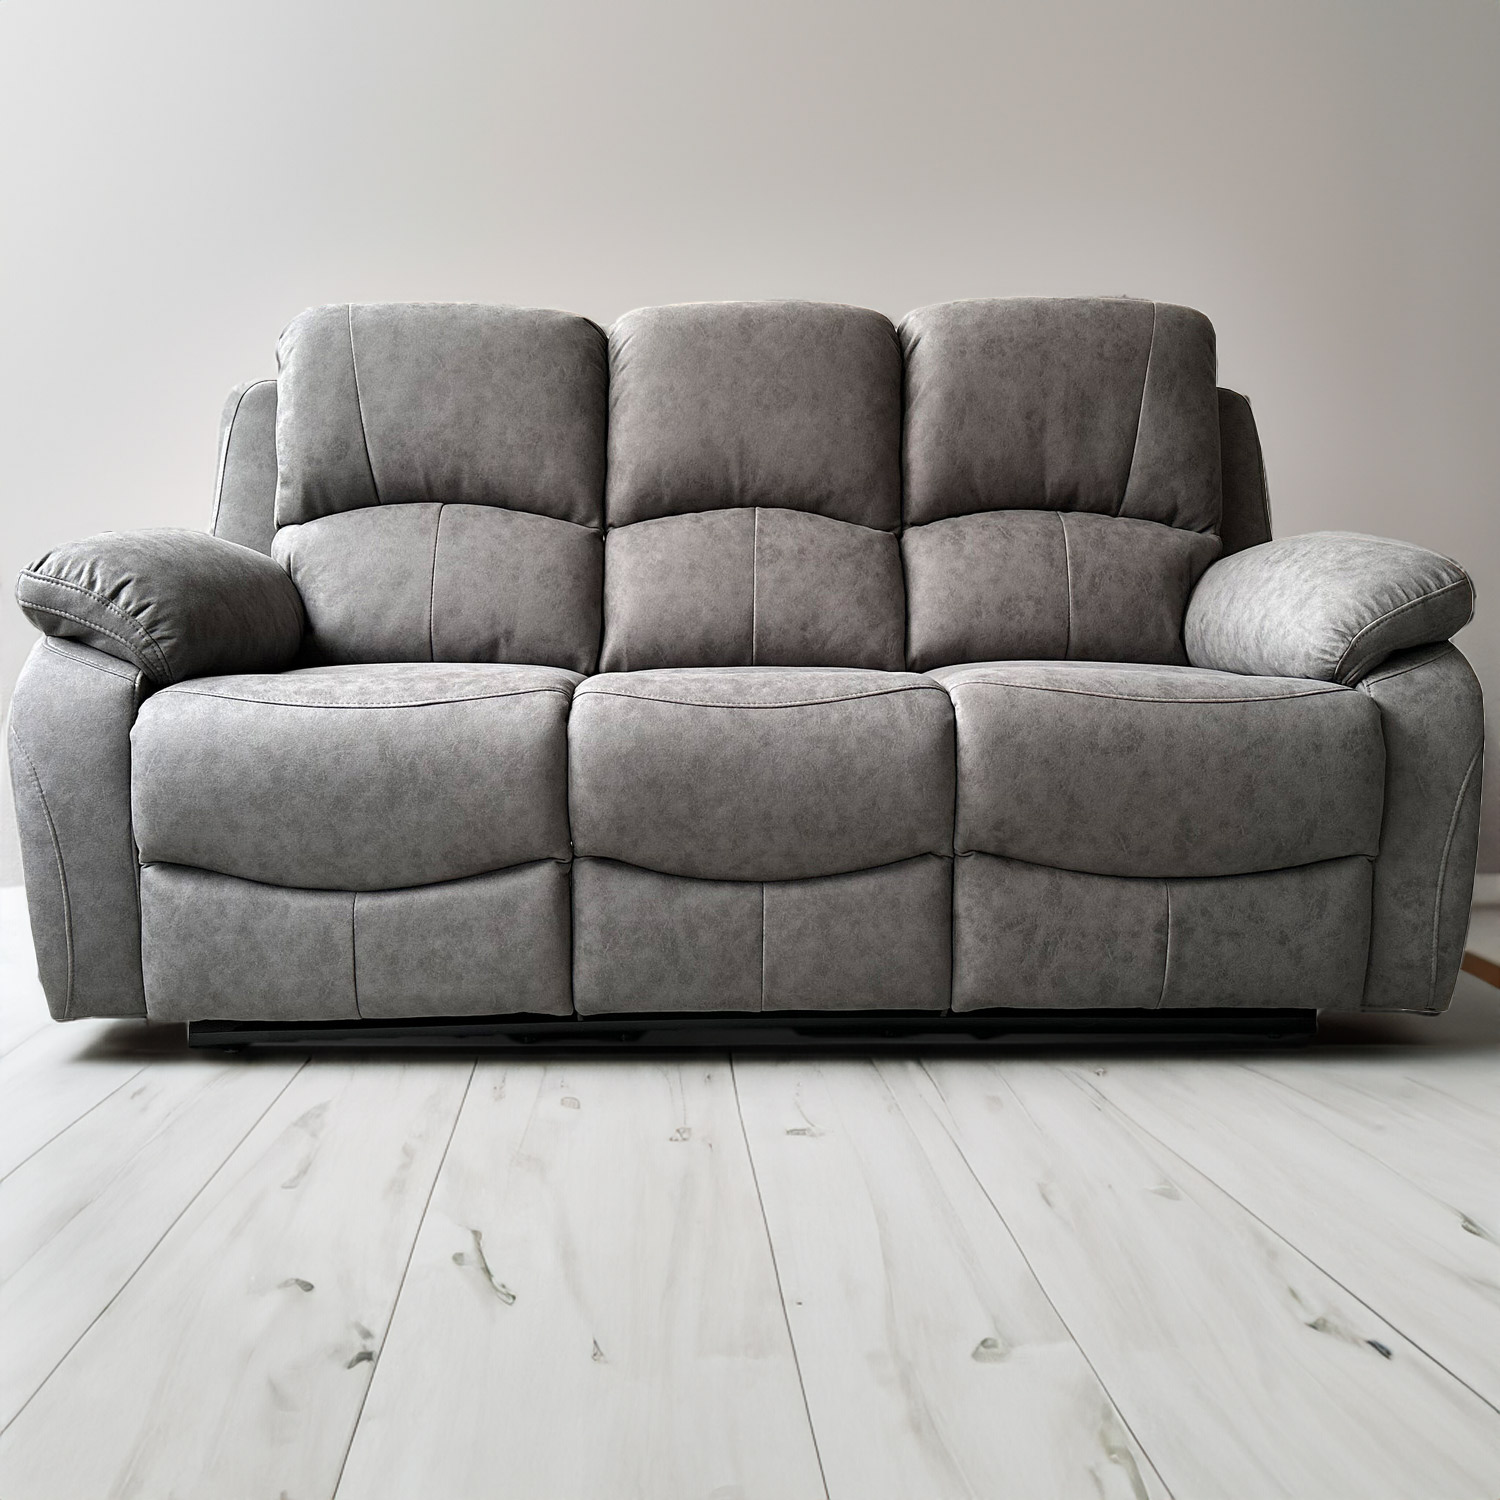 Milano 3 Seater Grey Fabric Recliner Sofa Image 1